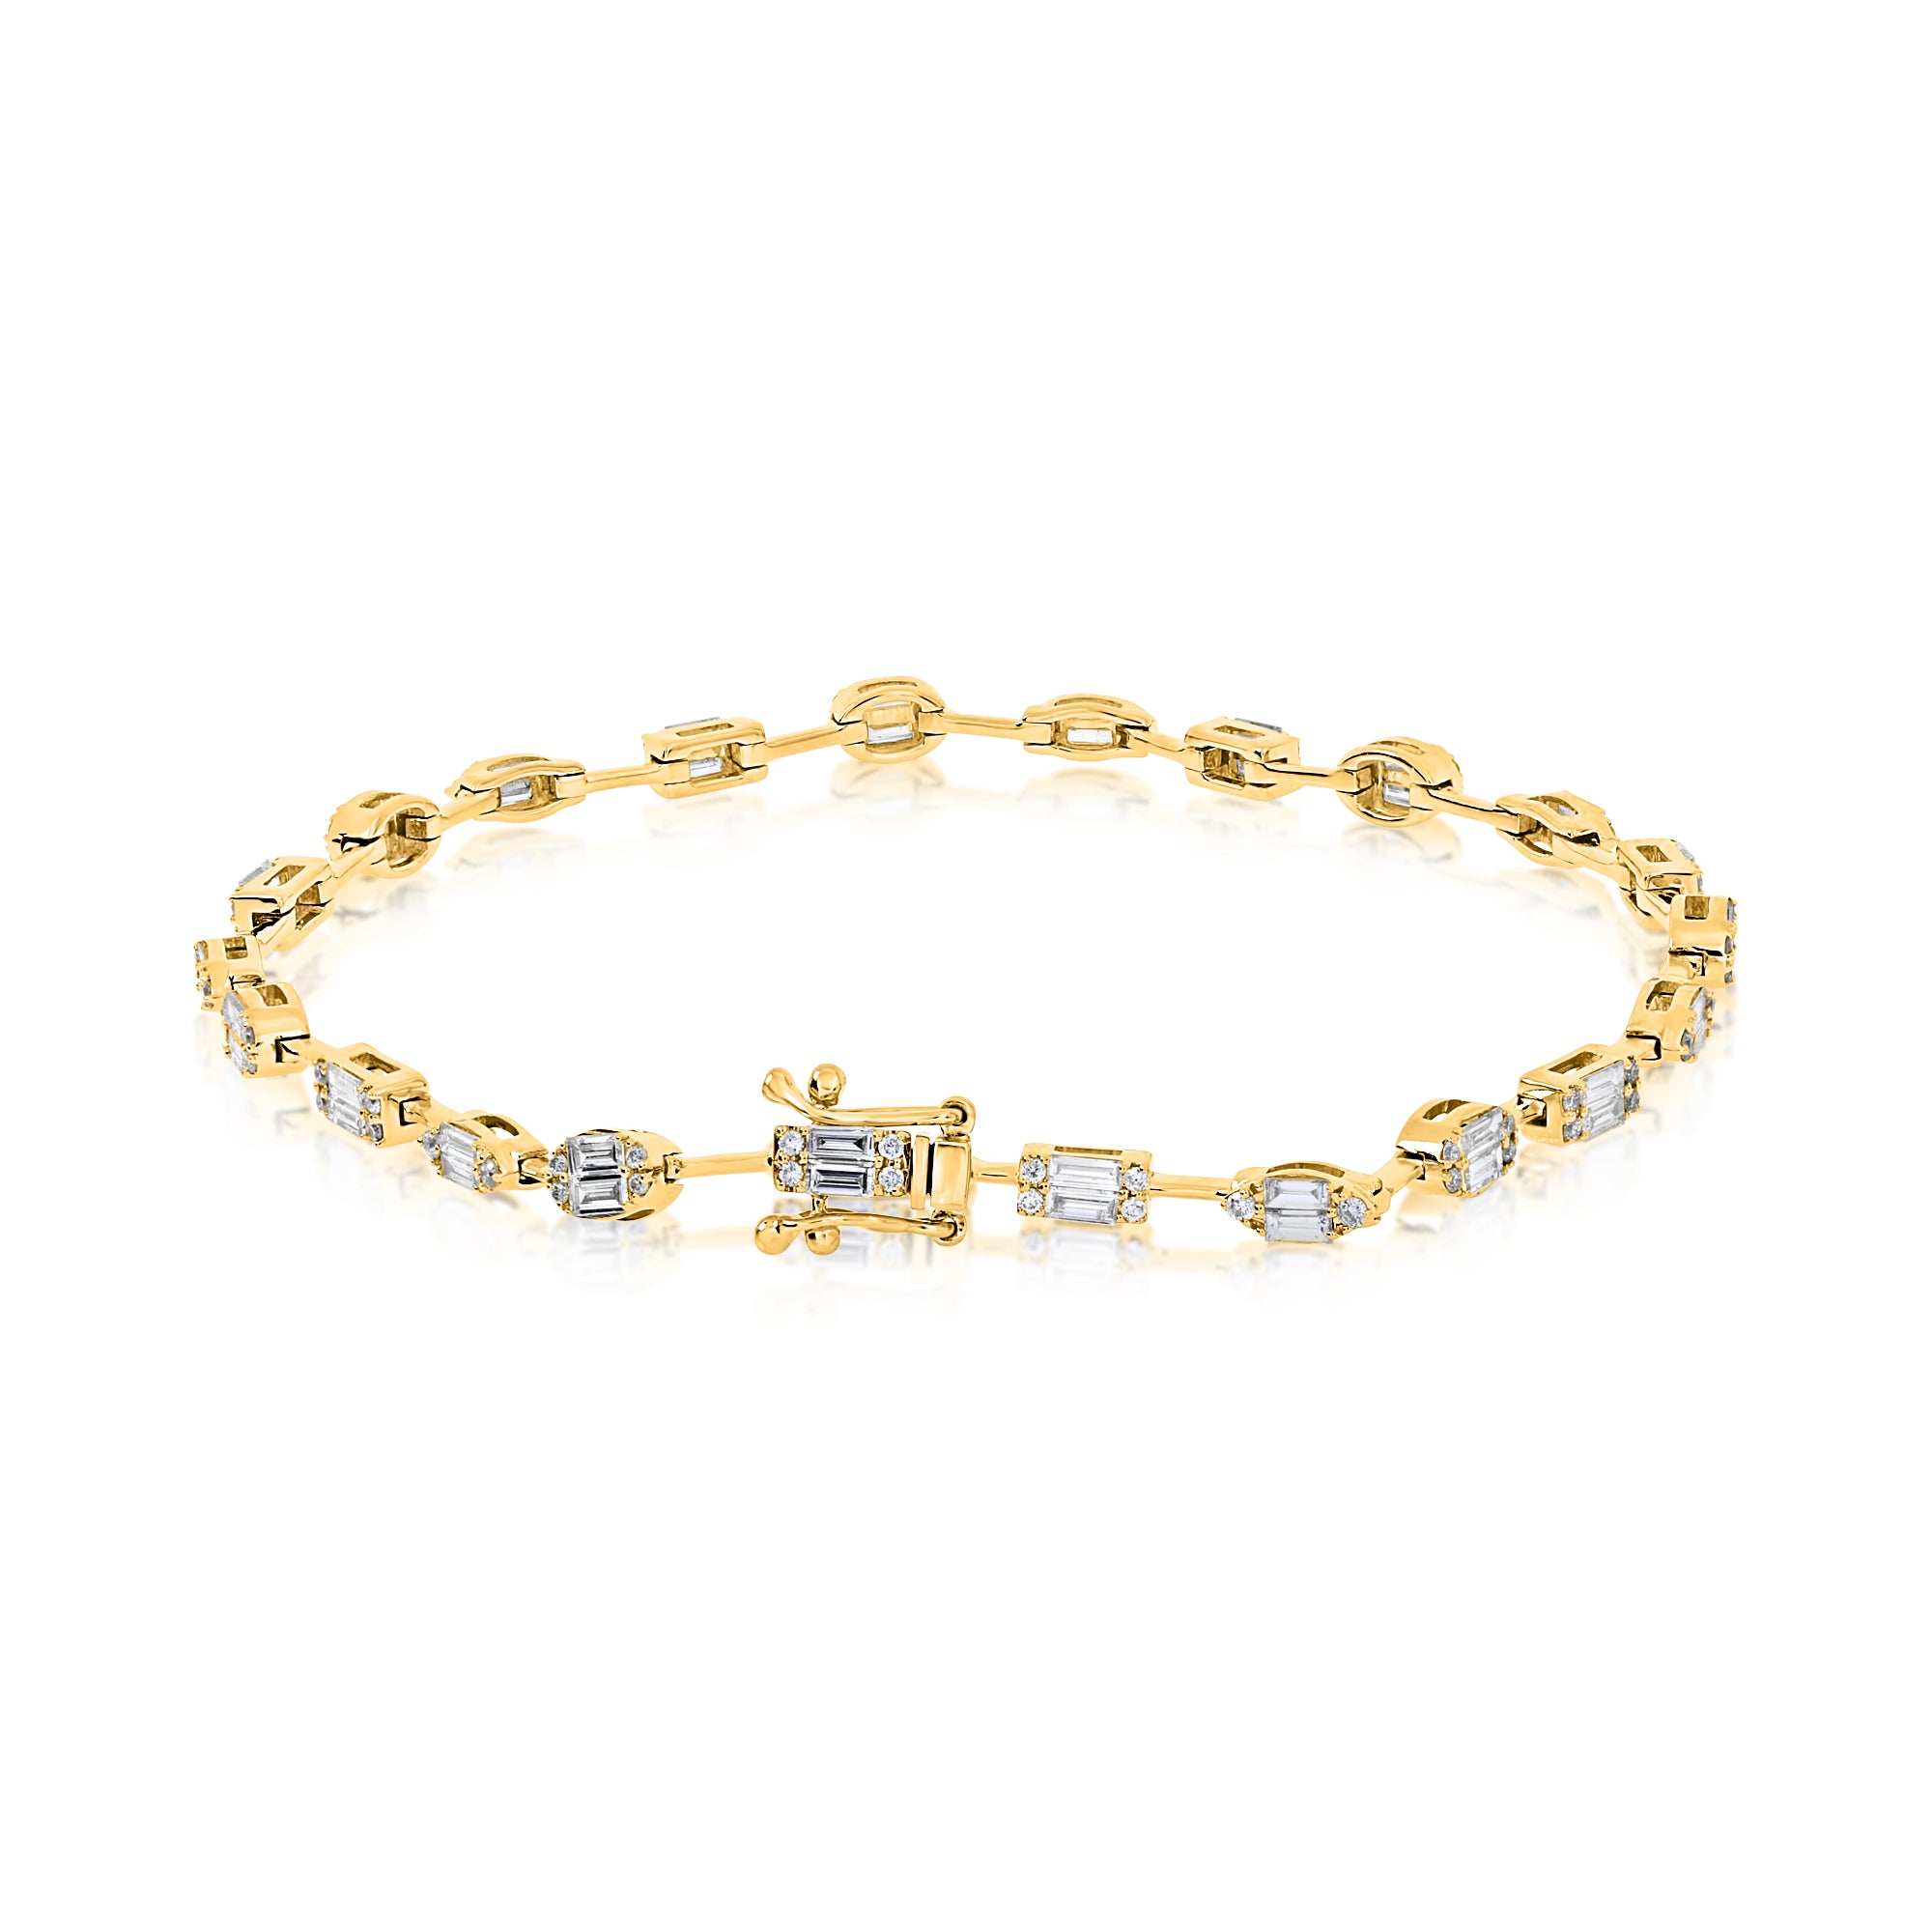 Baguette Diamond Bracelet in yellow gold, clasp